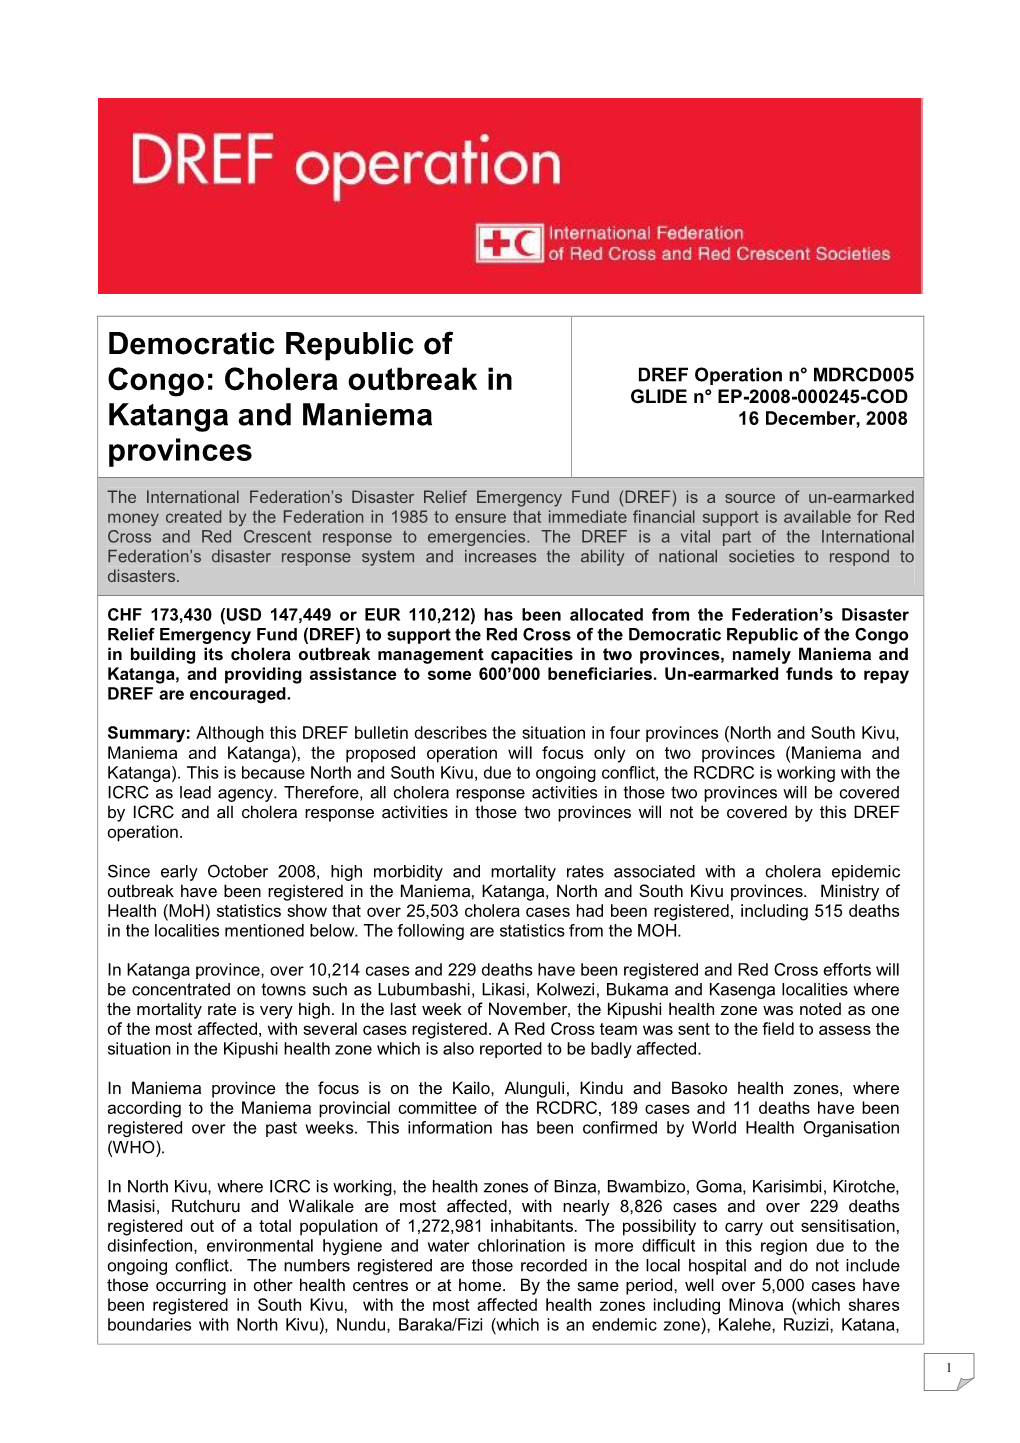 Democratic Republic of Congo: Cholera Outbreak in Katanga And